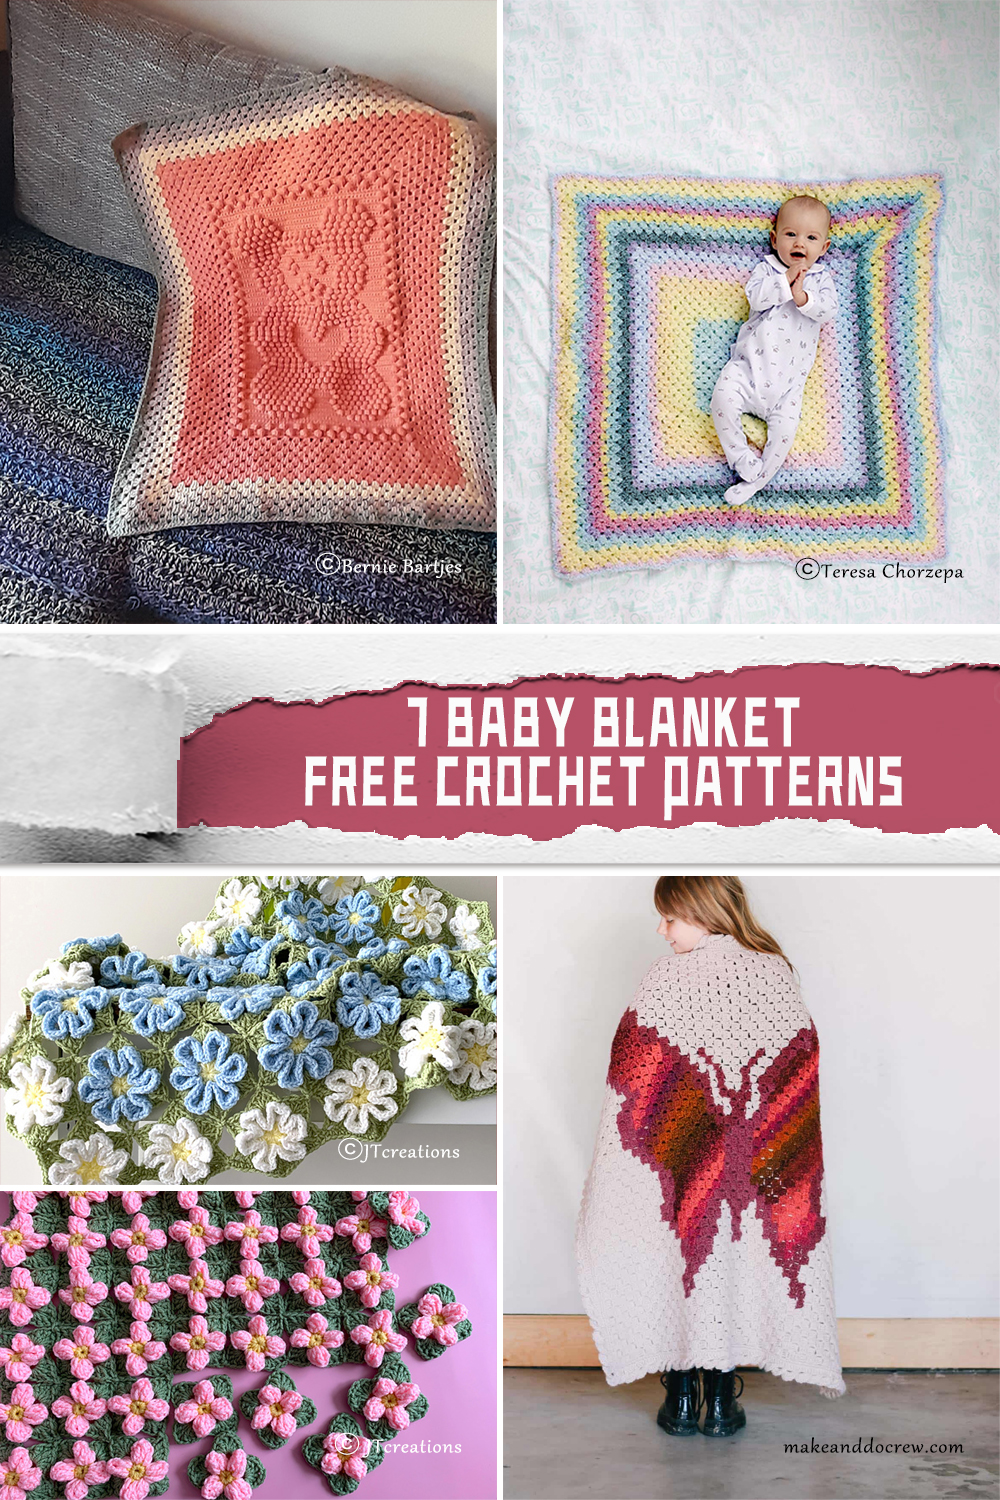 7 Baby Blanket Crochet Patterns - FREE - iGOODideas.com